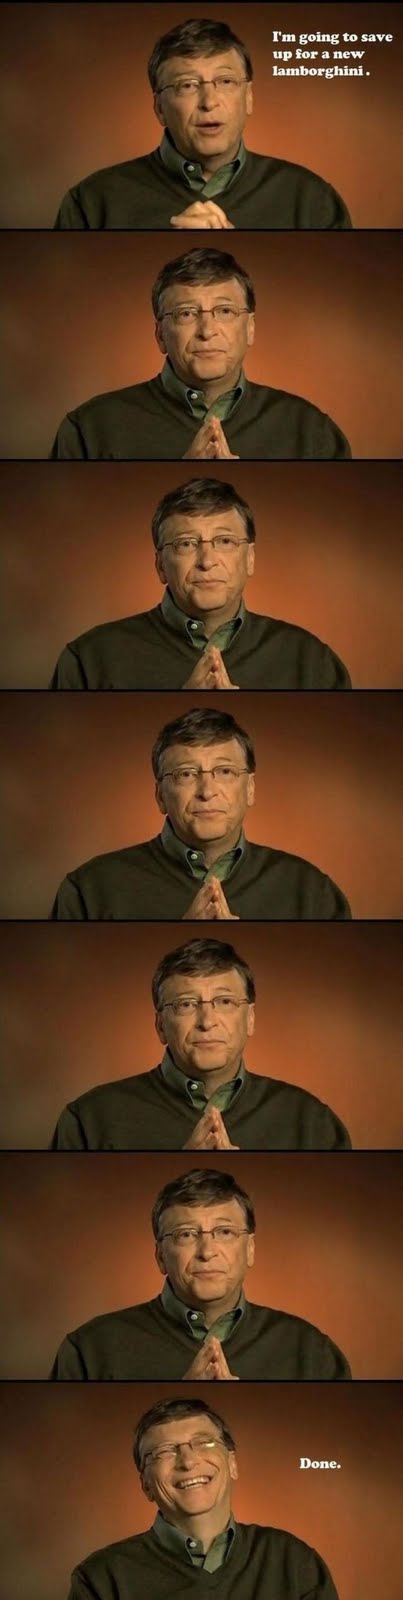 Bill Gates is saving up for a new Lamborghini